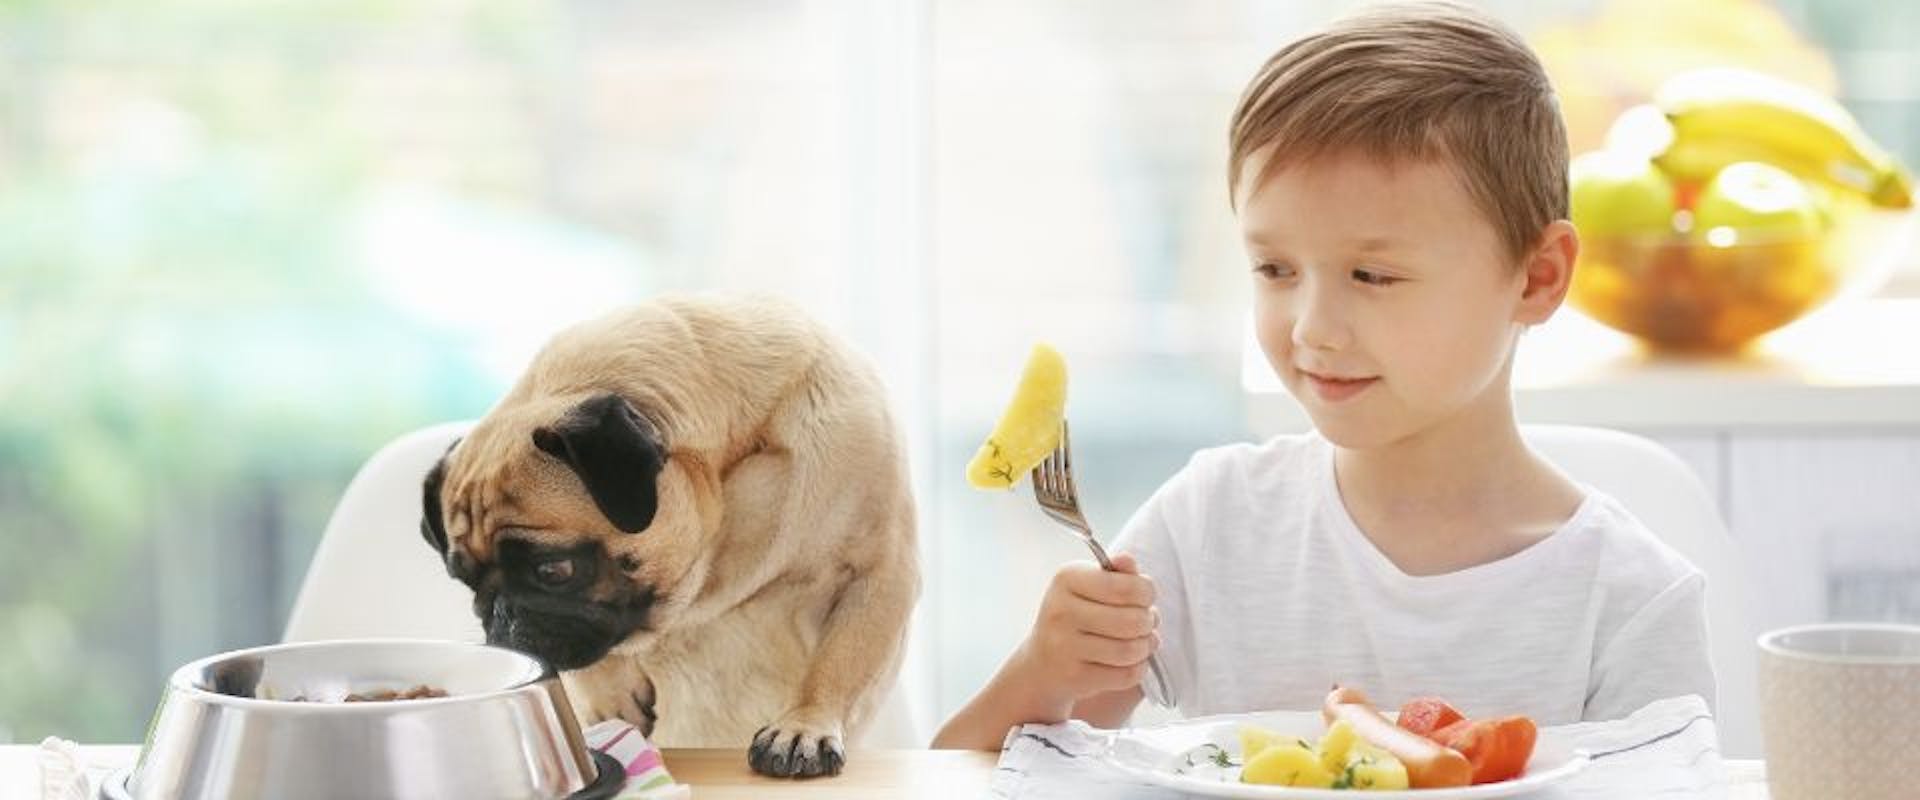 Child offering potato to dog